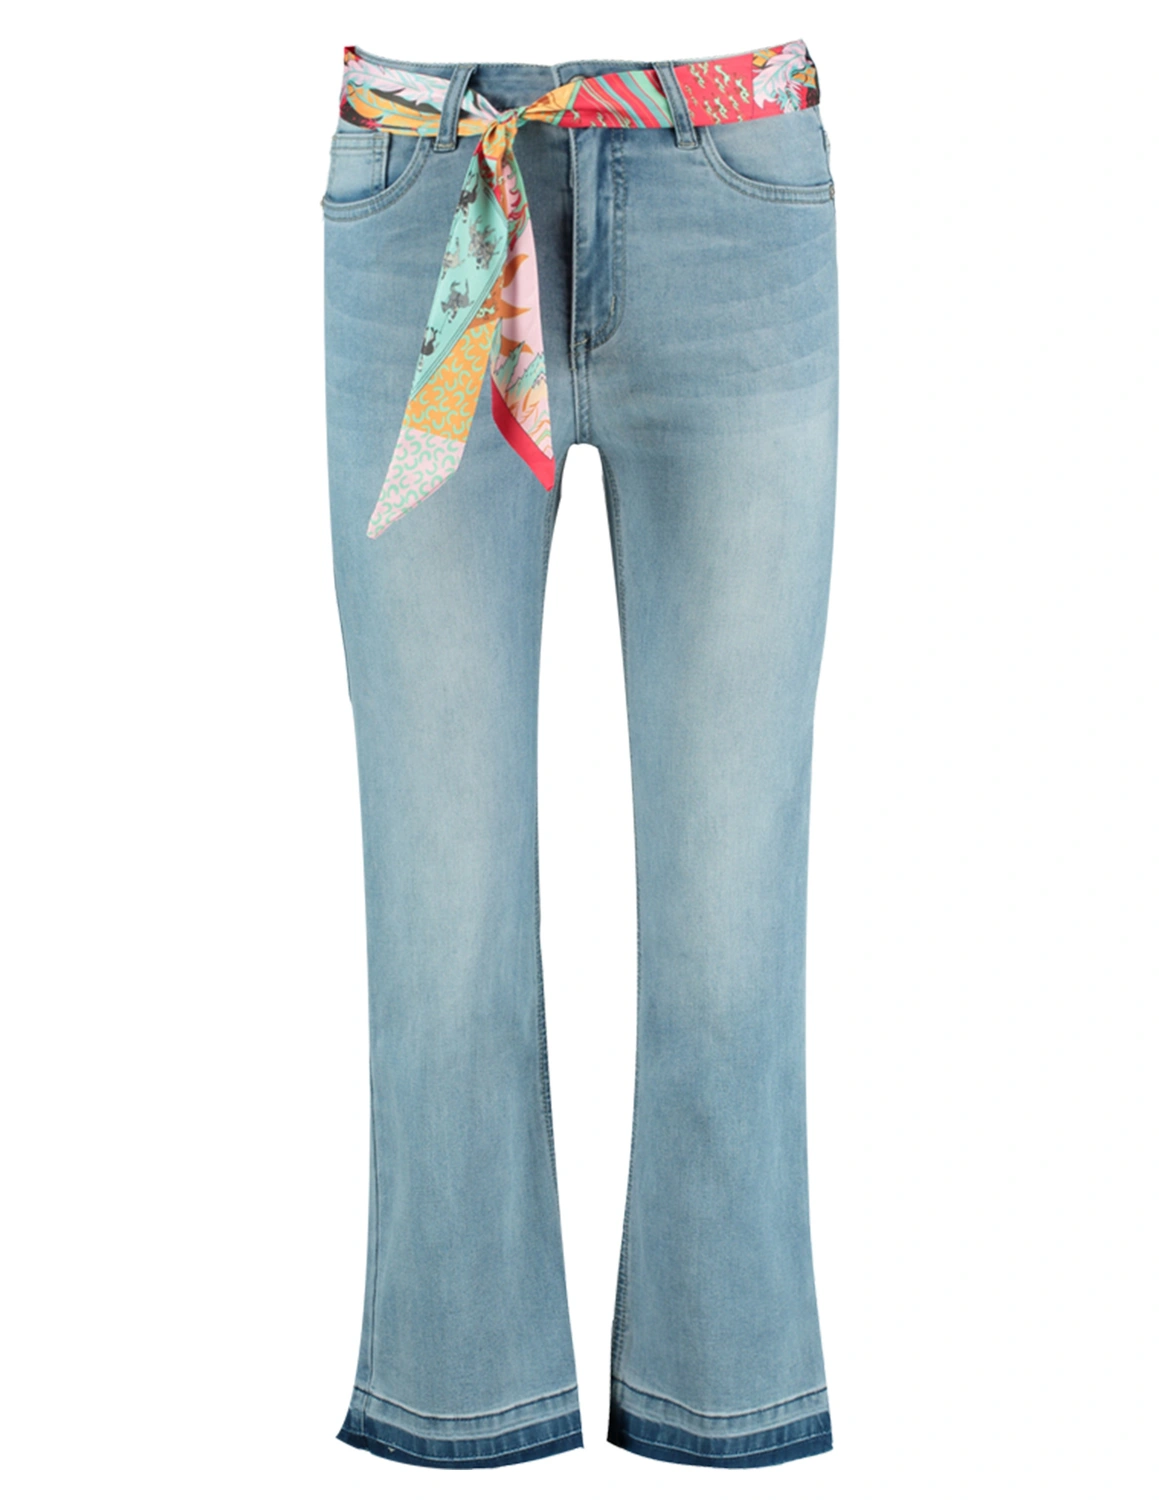 Opstand Terzijde tornado Geisha Jeans 7/8 flared + belt 31004-10 jeans blauw kopen bij The Stone